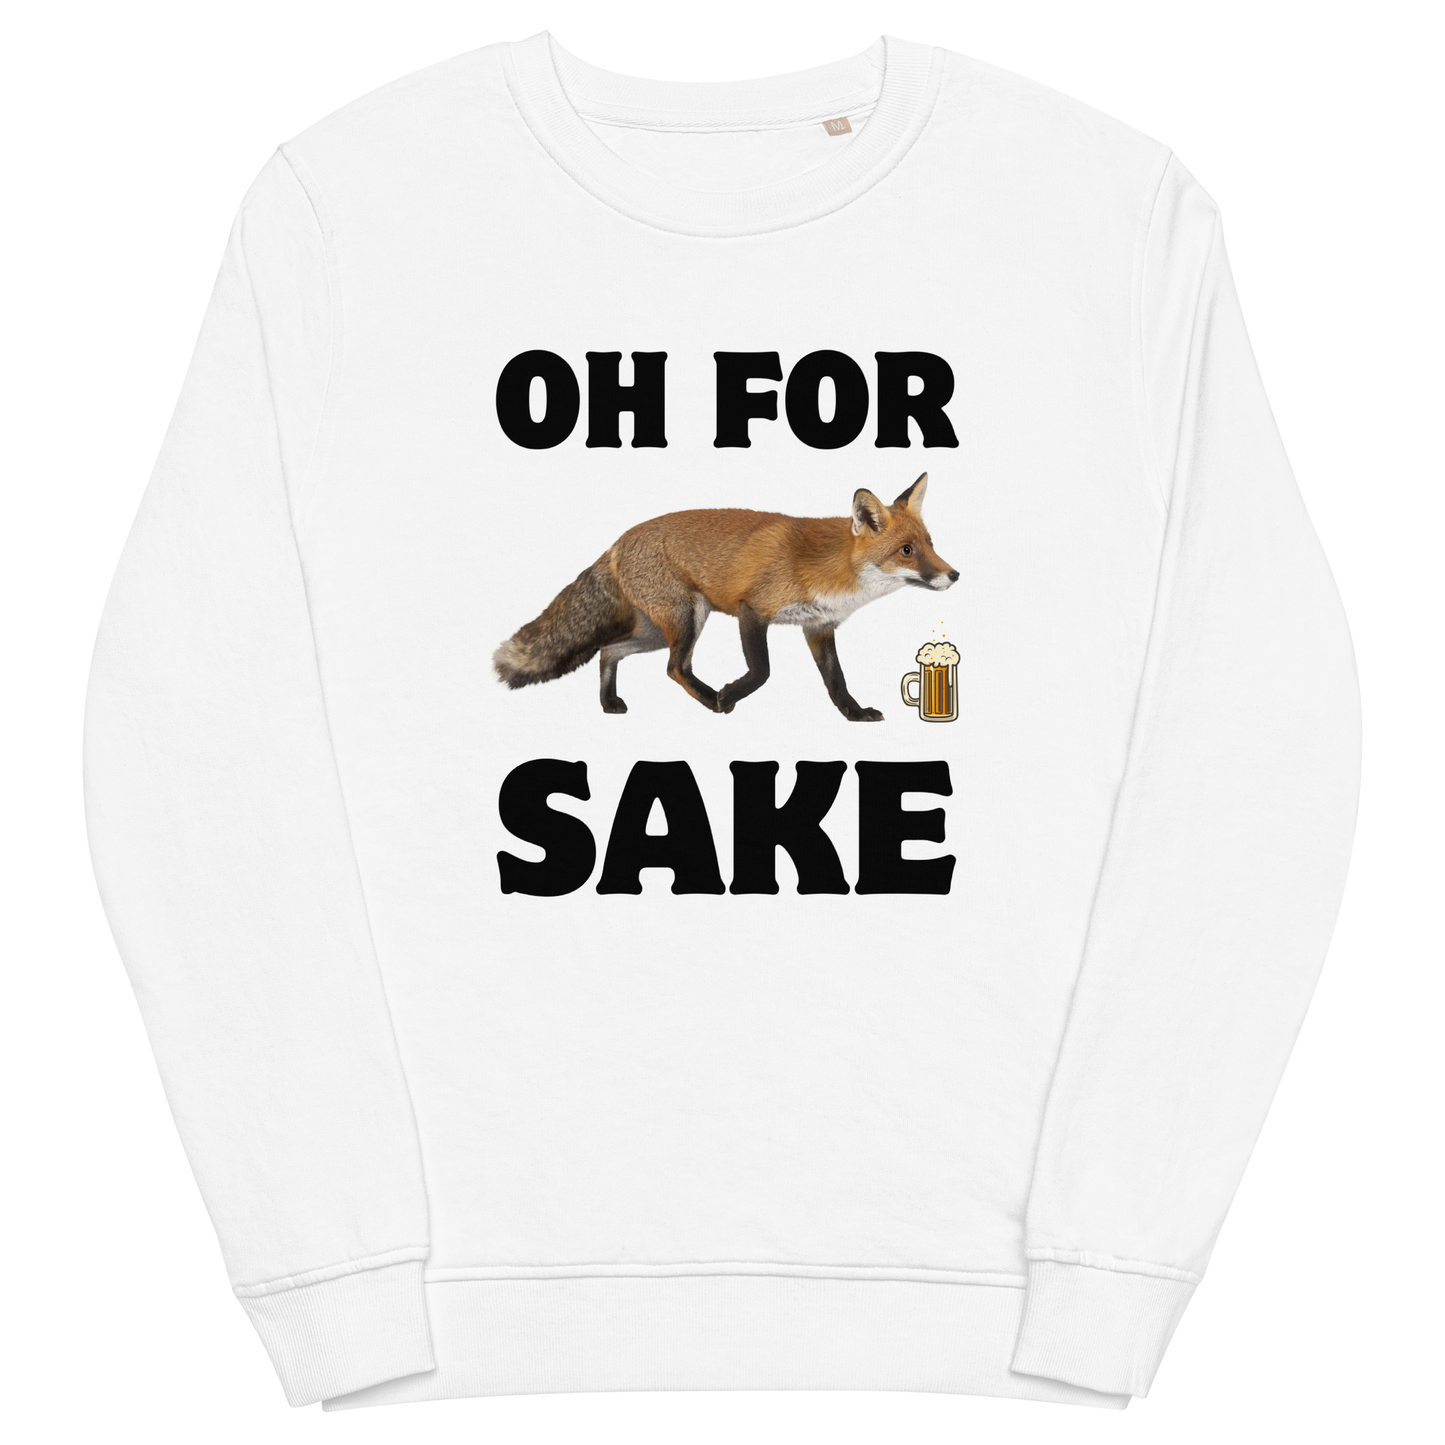 White Organic Cotton Fox Sweatshirt featuring a Oh For Fox Sake graphic on the chest - Funny Graphic Fox Sweatshirts - Boozy Fox